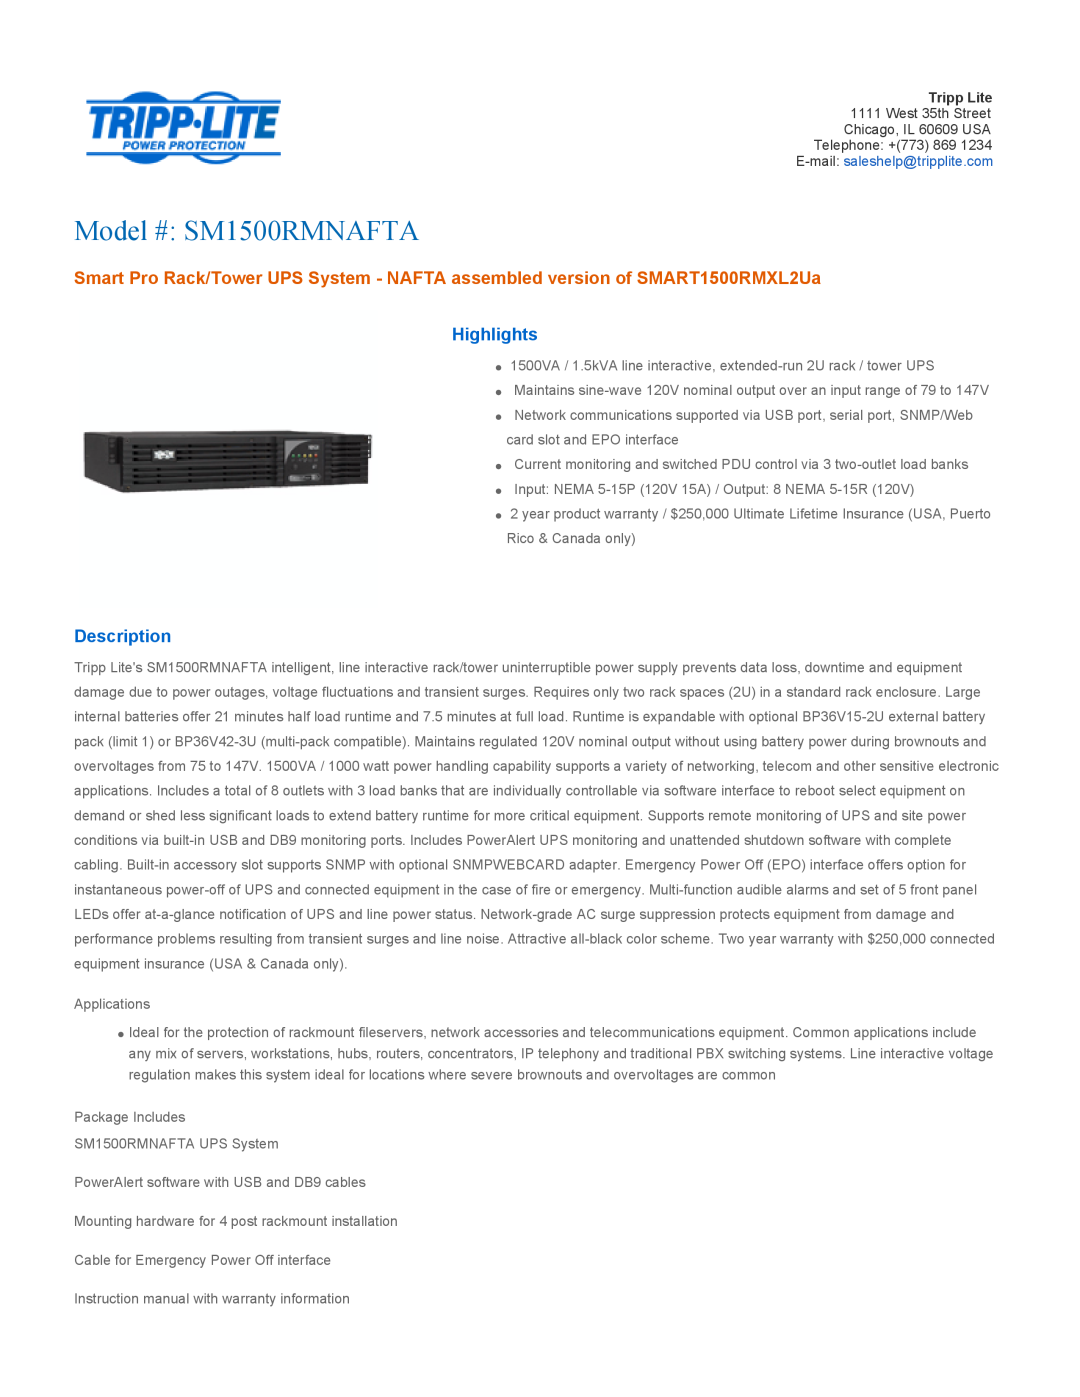 Tripp Lite warranty Highlights, Description, Model # SM1500RMNAFTA 